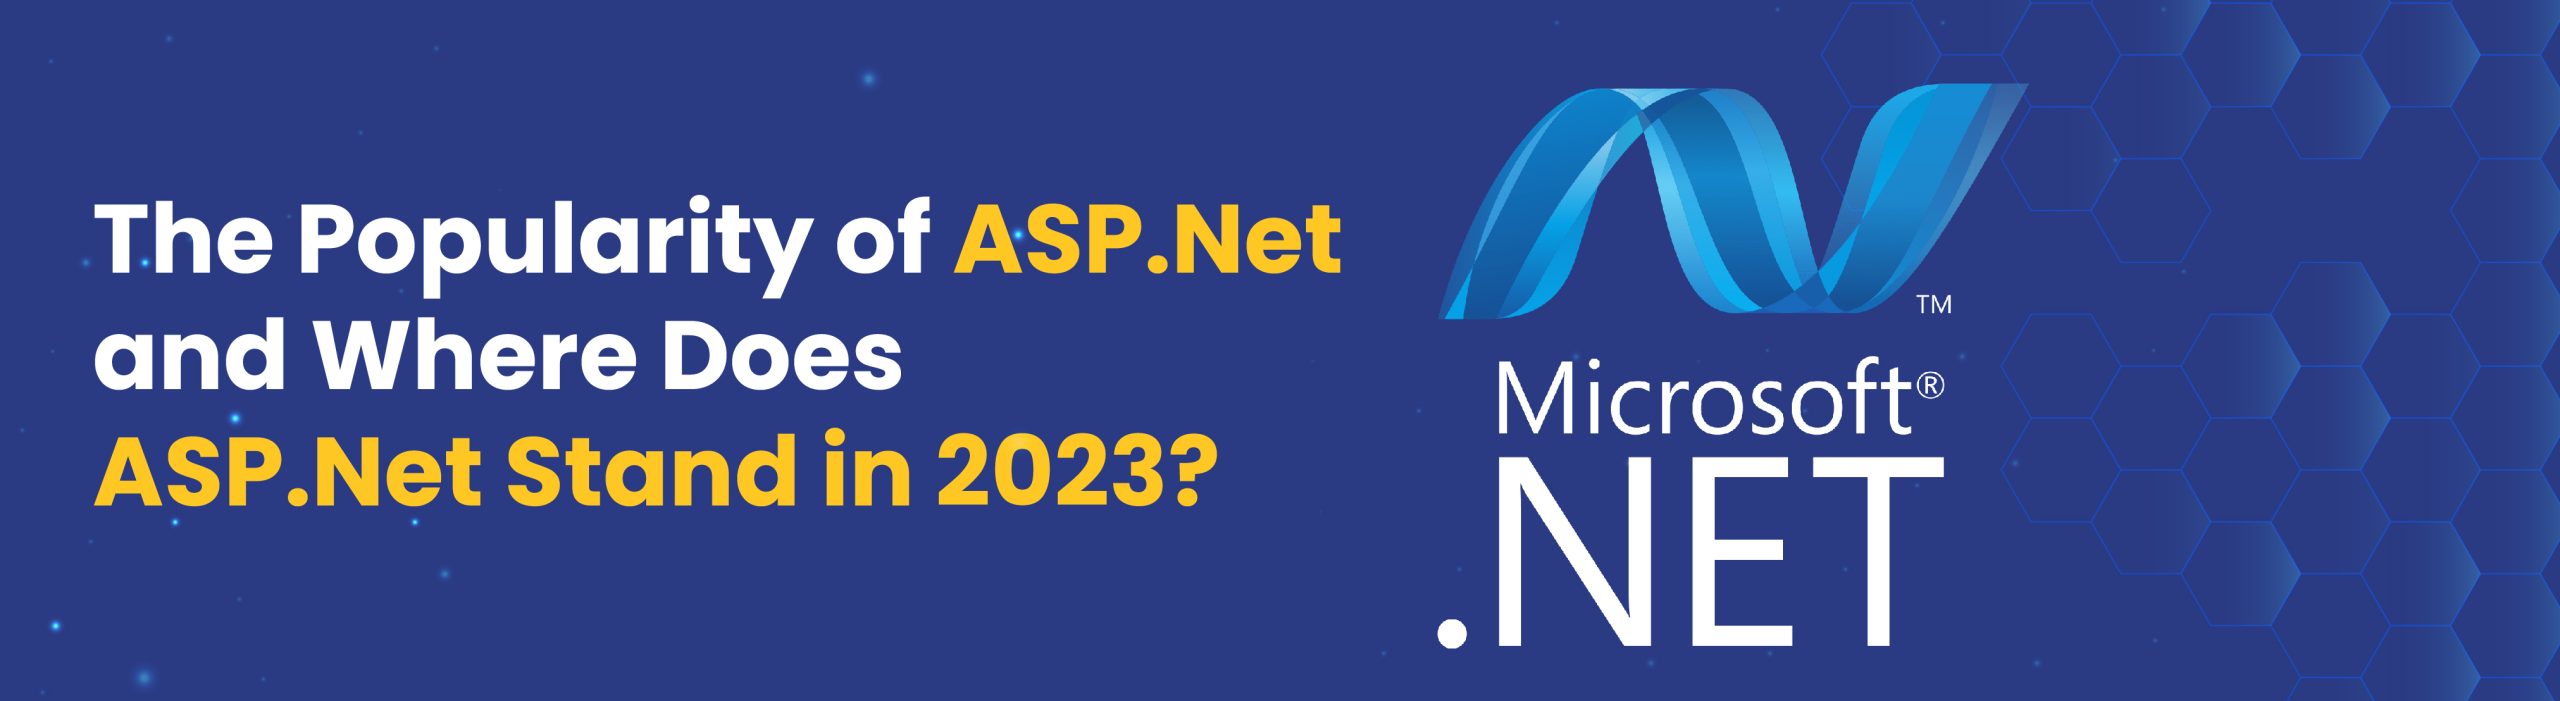 popularity of asp.net development